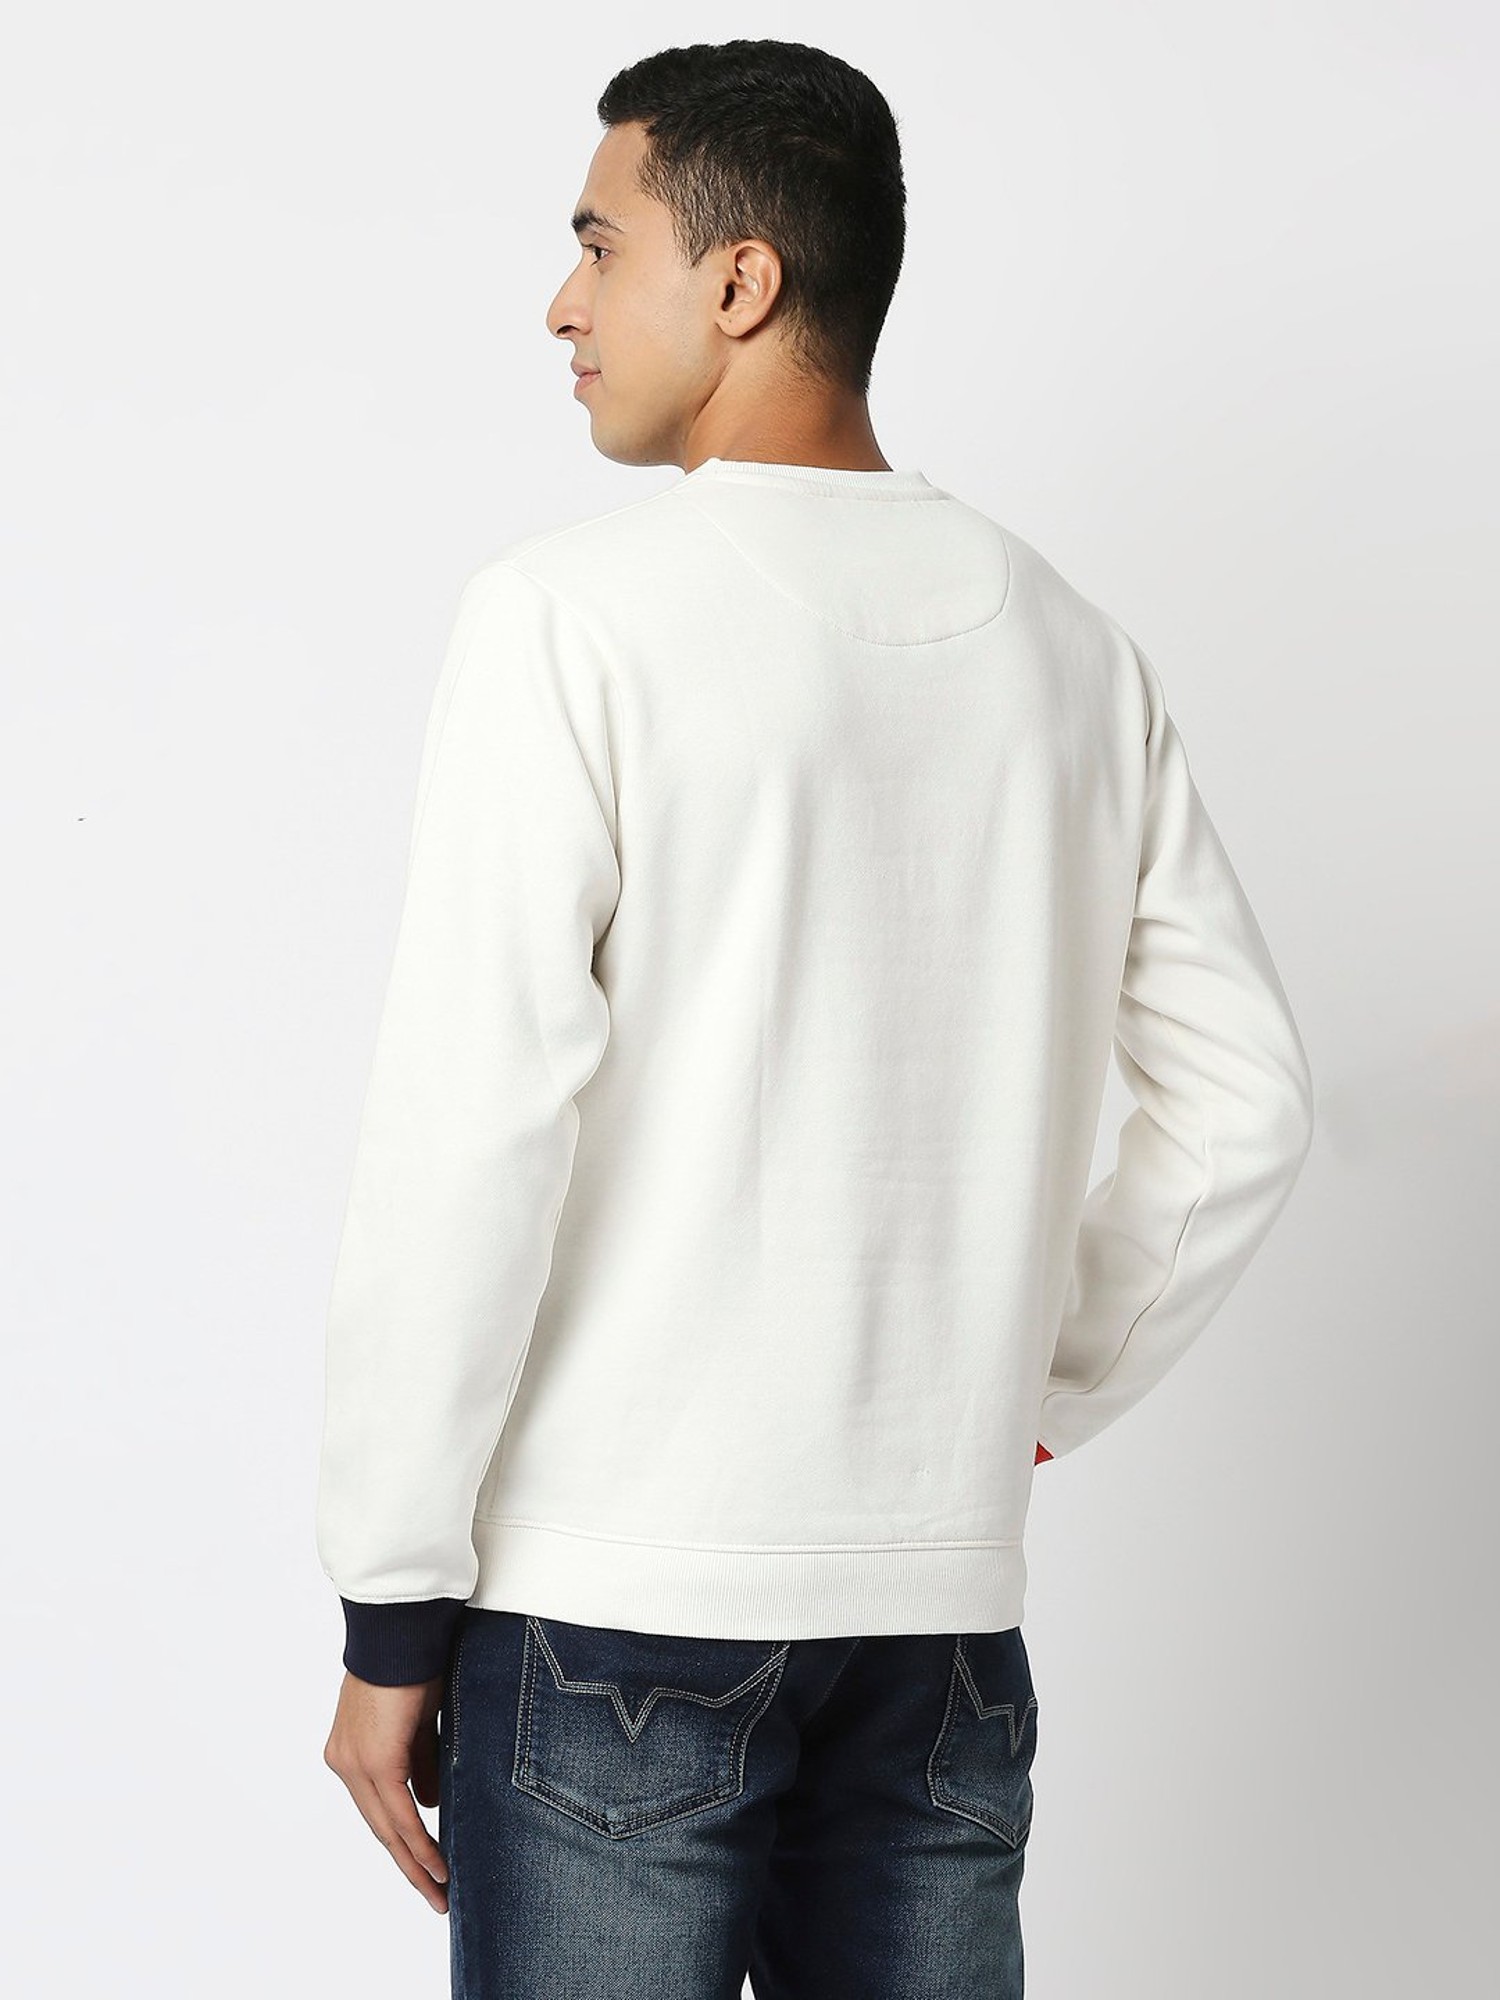 CLiQ Off Men\'s Tata Jeans Pepe Round White for @ Online Neck Buy Full Sleeves Sweatshirt